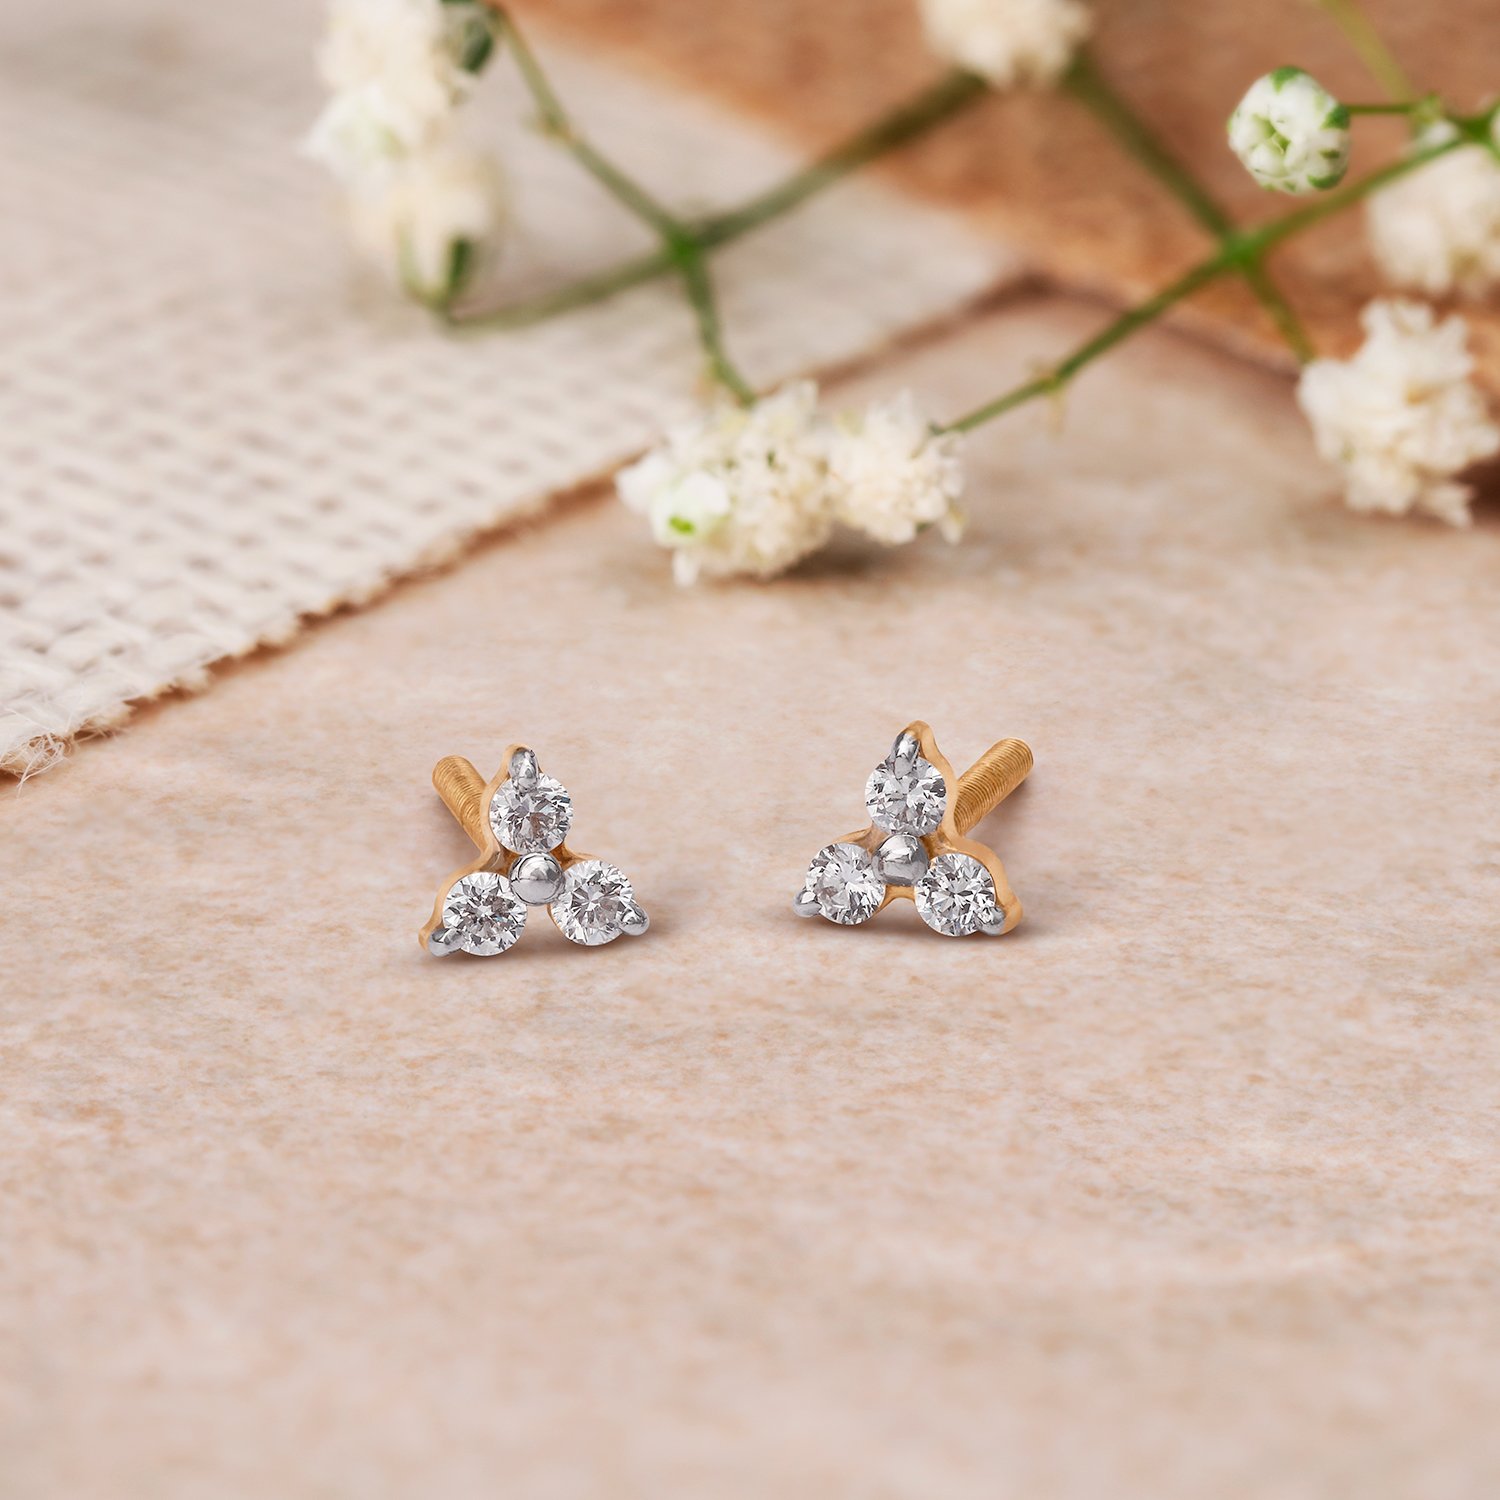 Preserve more than 149 tanishq diamond earrings best